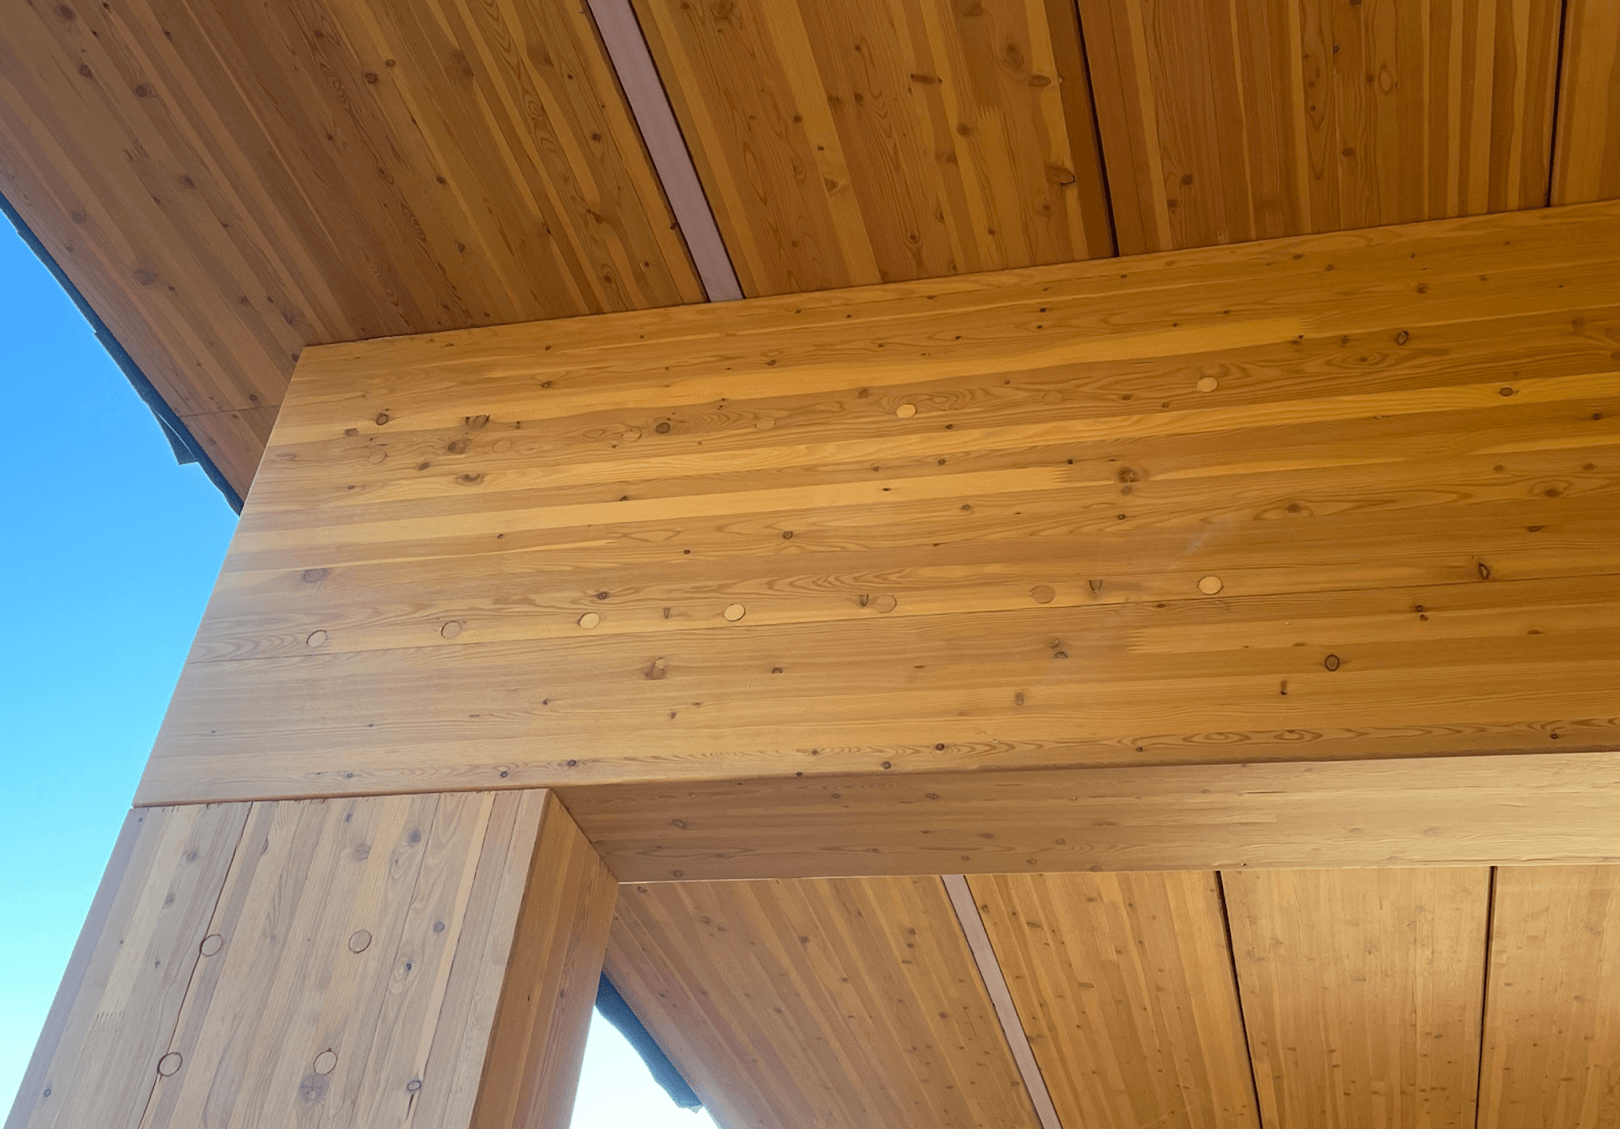 close-up of a timber frame